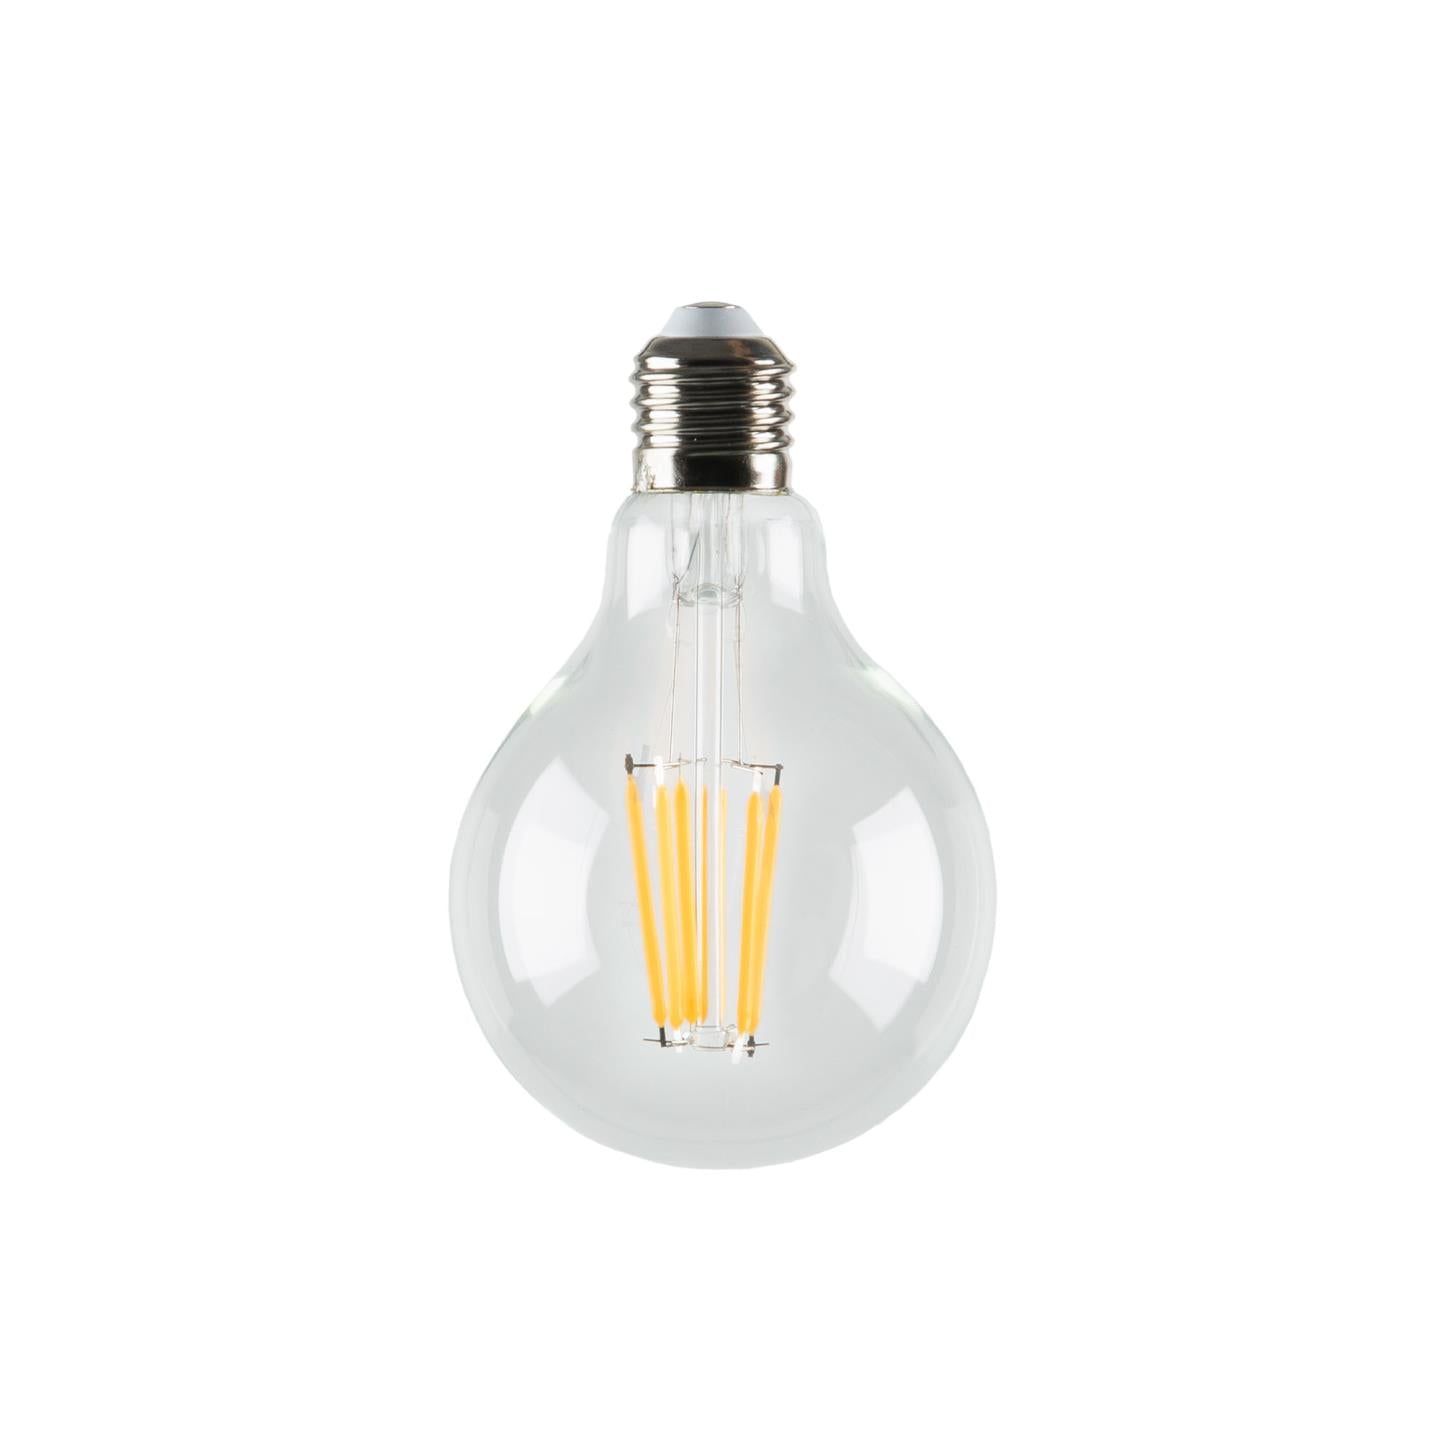 Halogen LED Bulb E27 of 4 W and 80 mm warm light